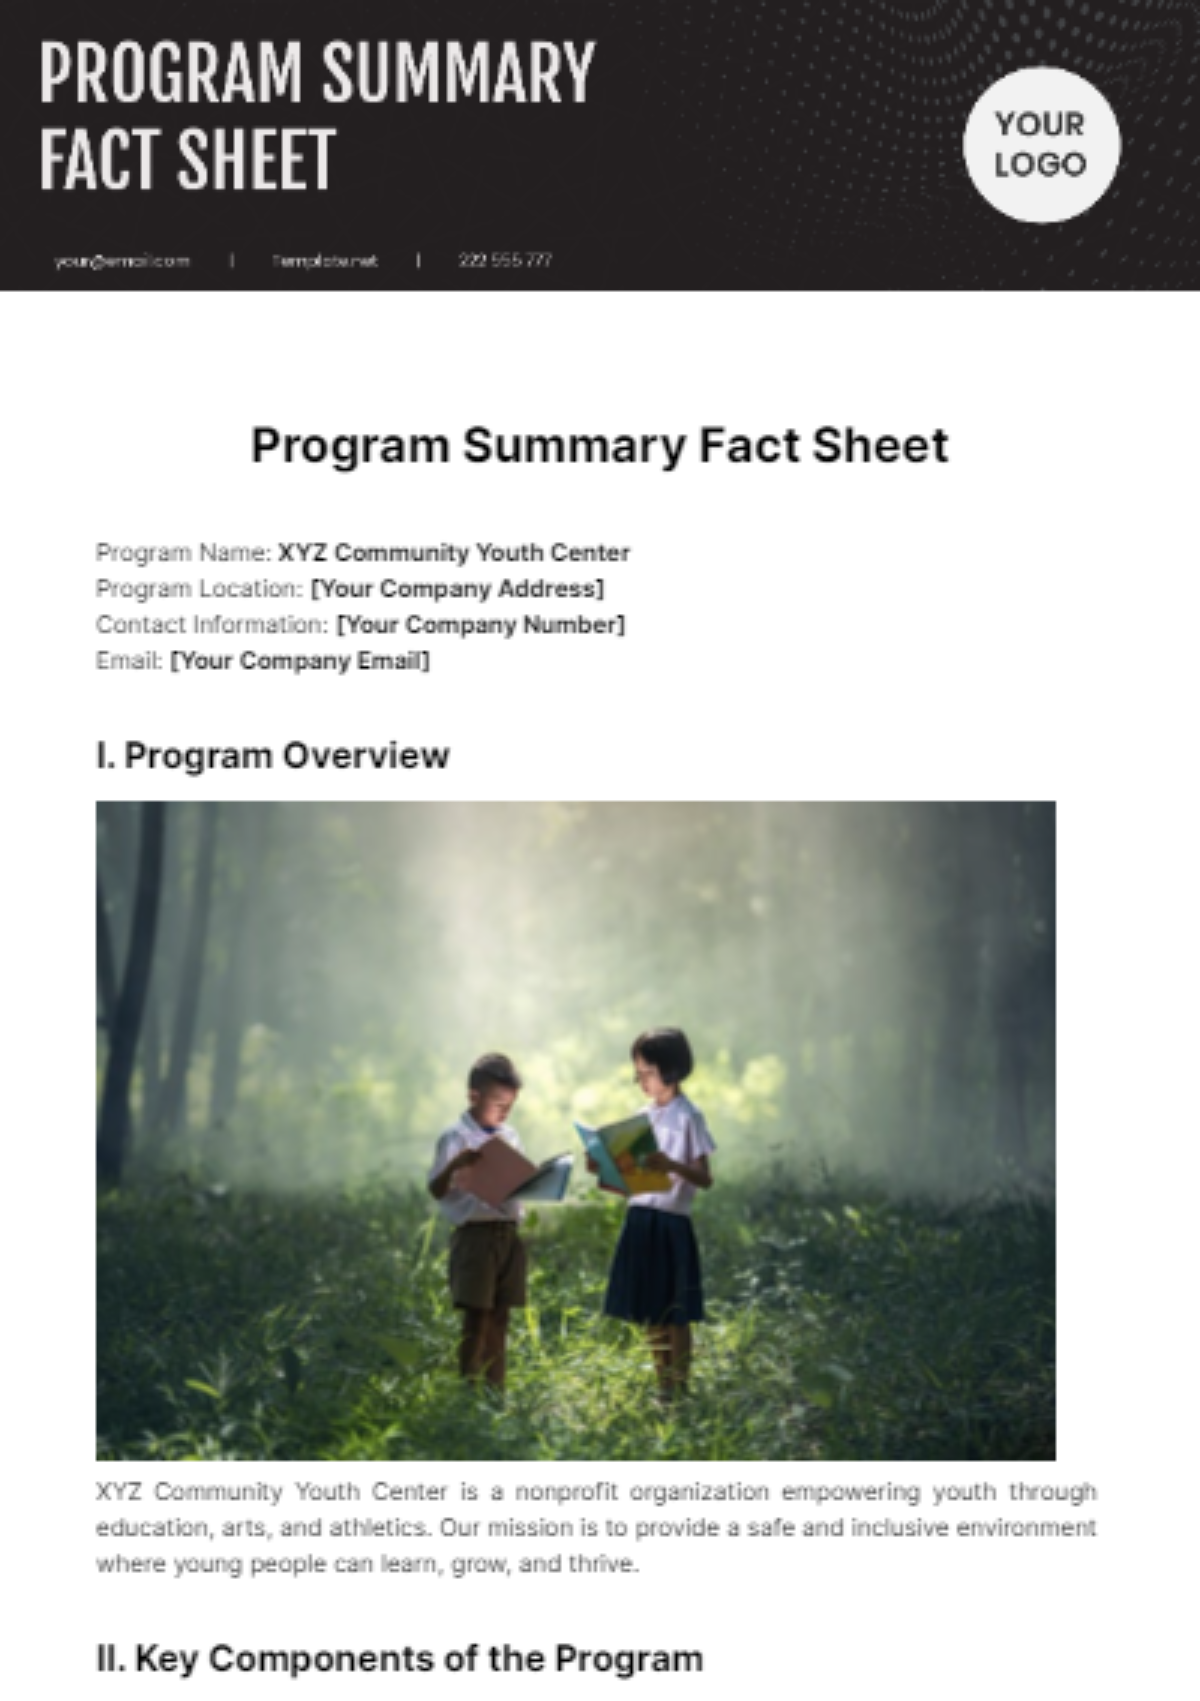 Program Summary Fact Sheet Template